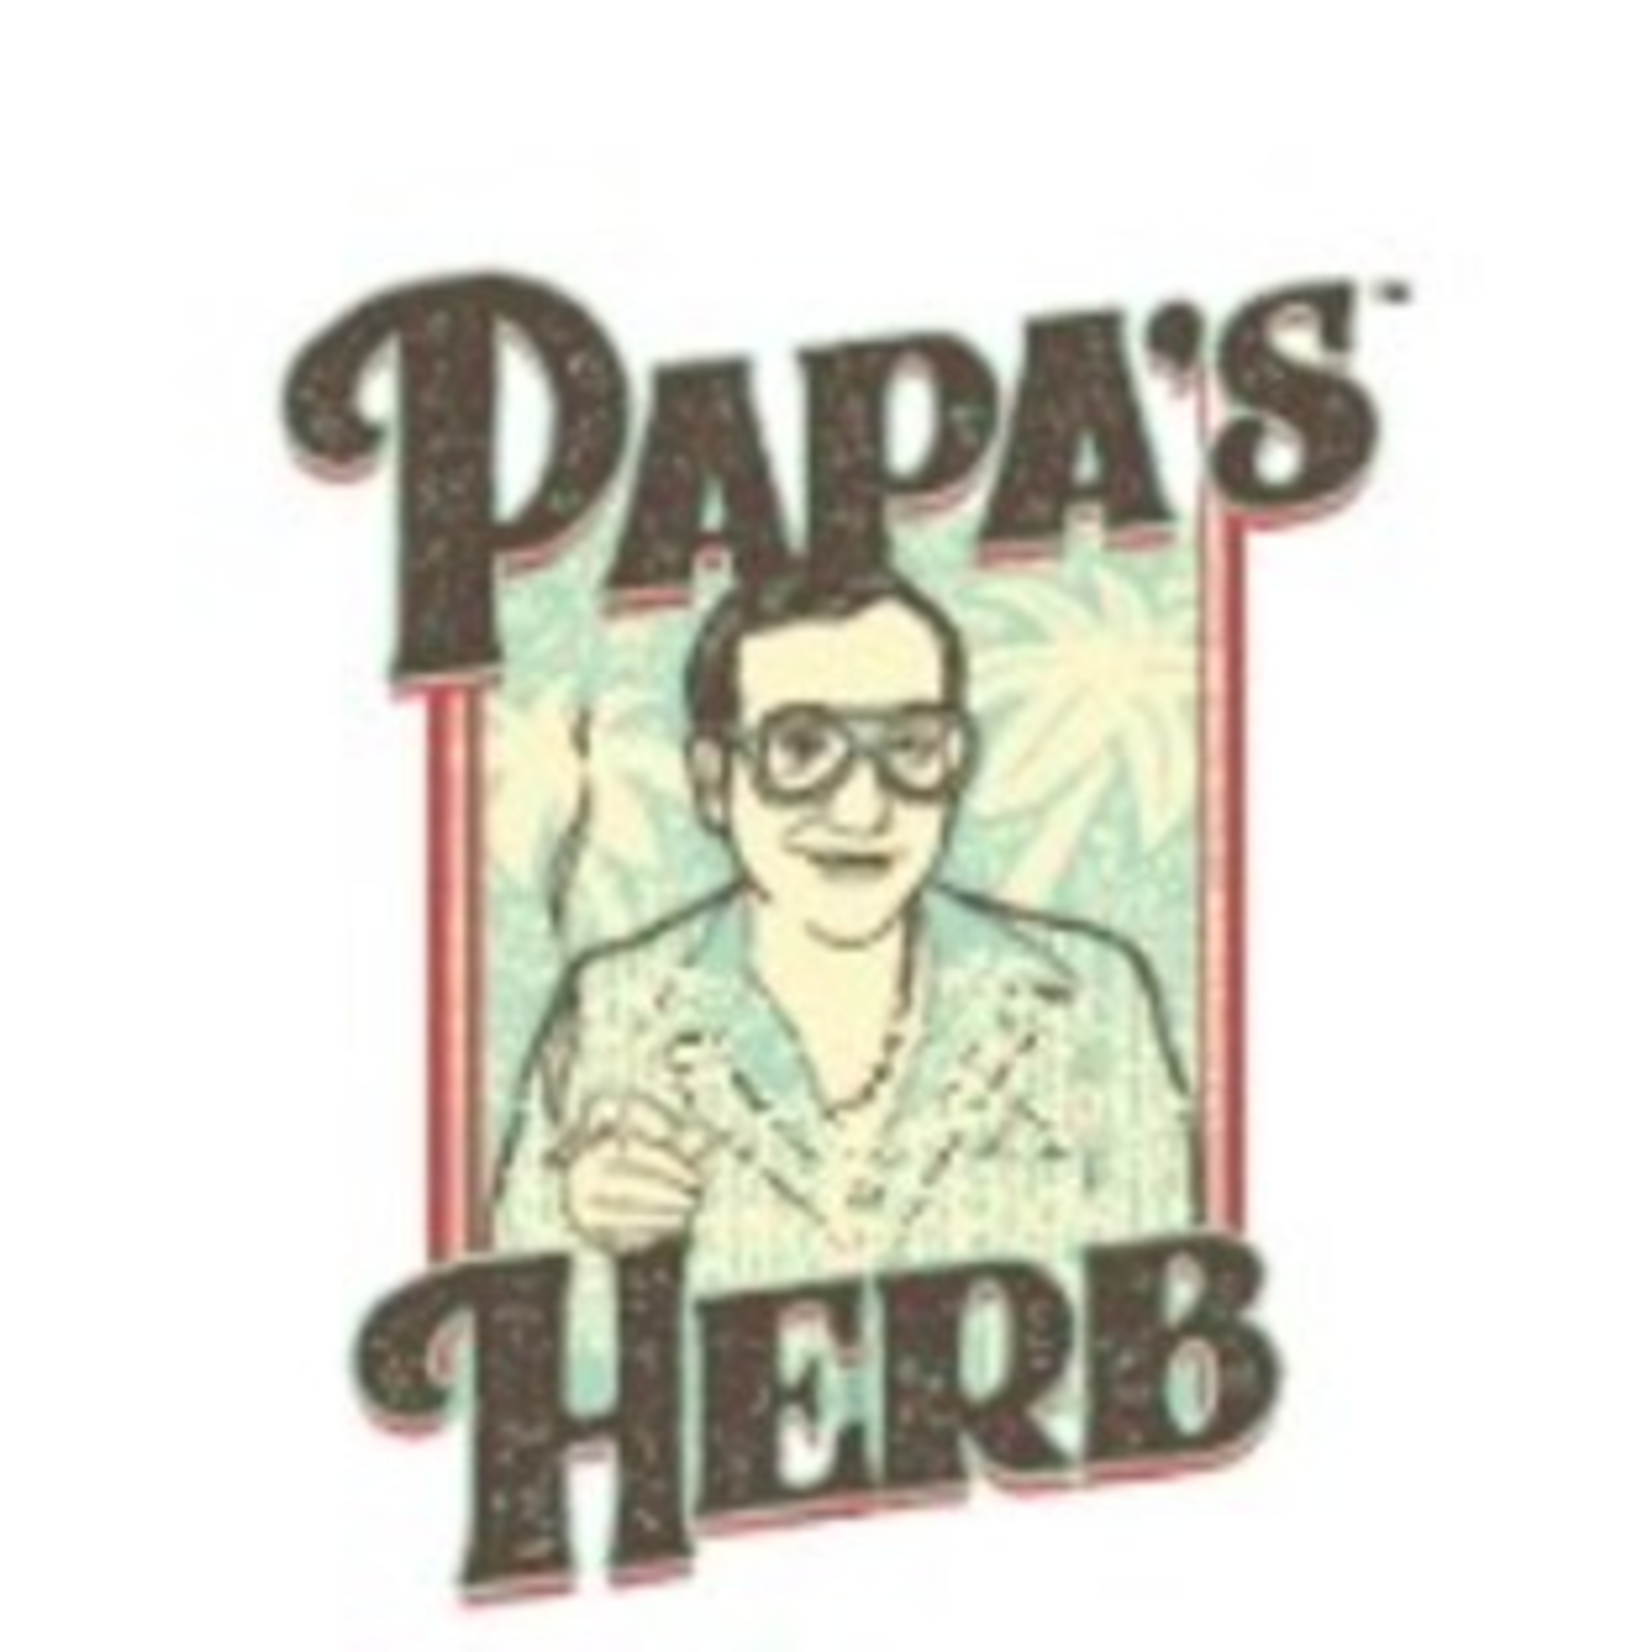 Papa's Herb - Dosido